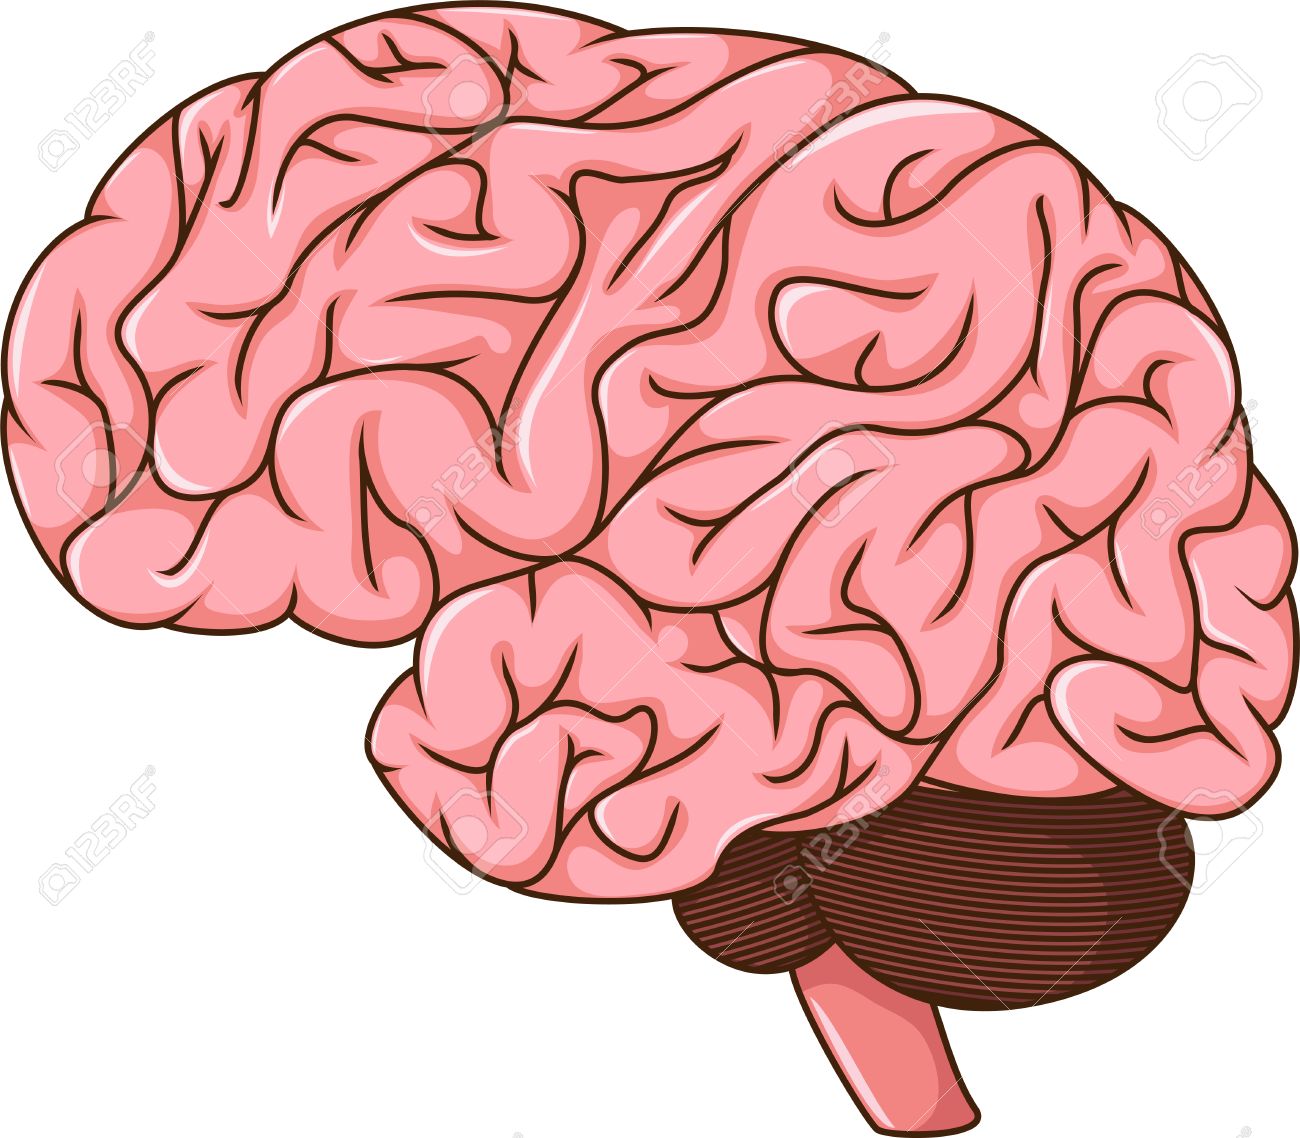 Download Free png Human Brain Cartoon Royalty Free Cliparts.